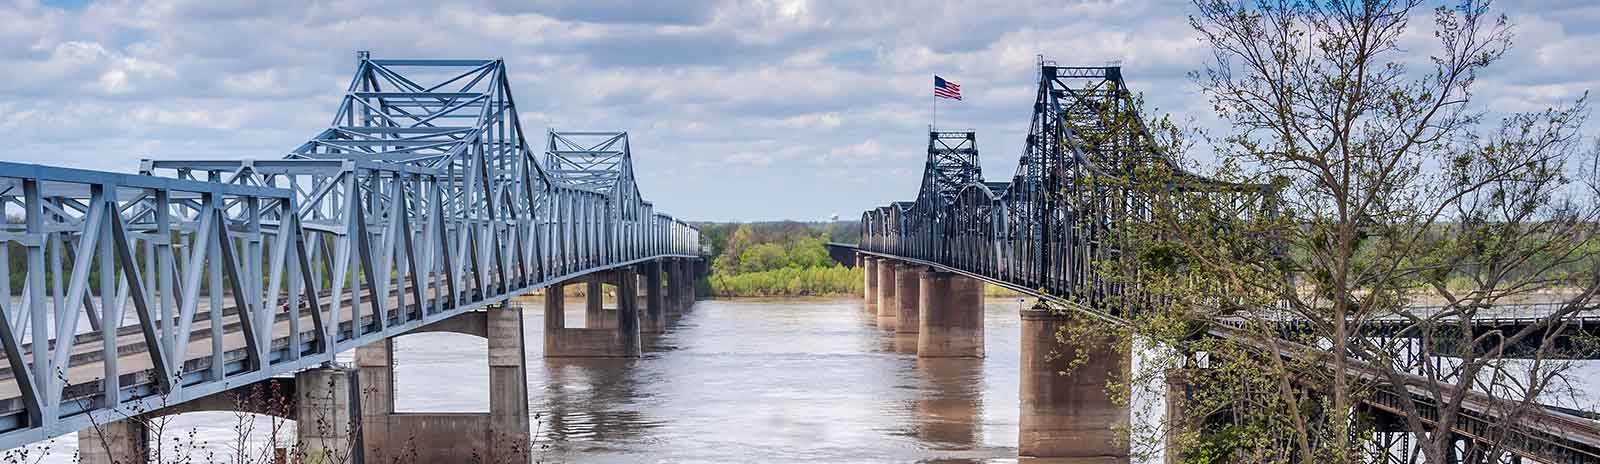 Central Mississippi